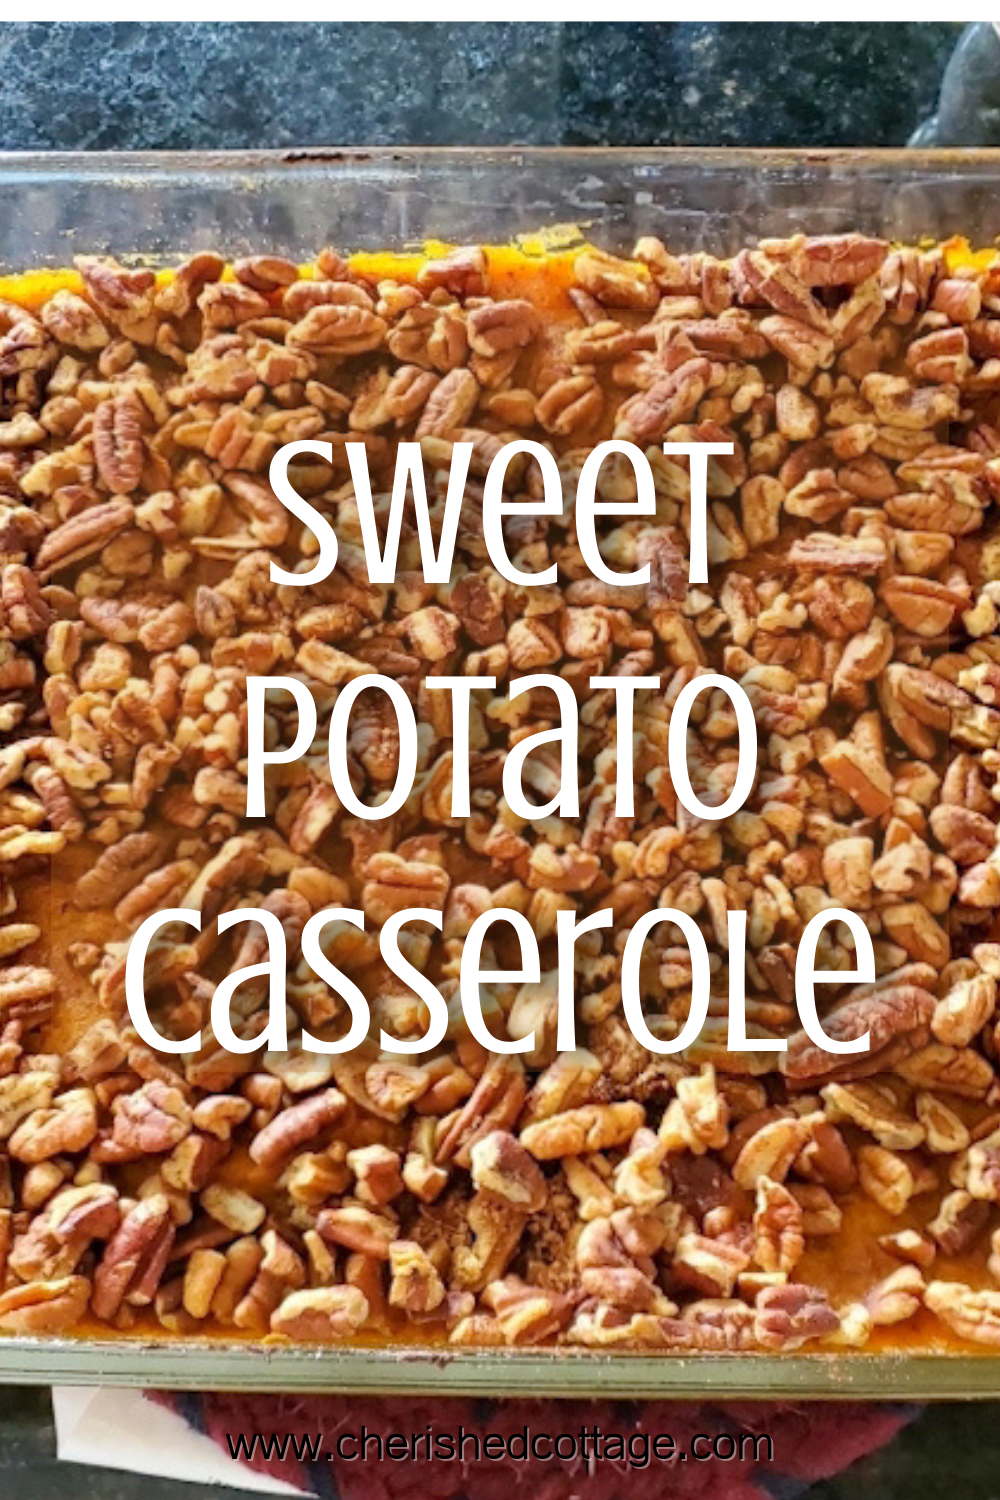 Lisa’s Sweet Potato Casserole